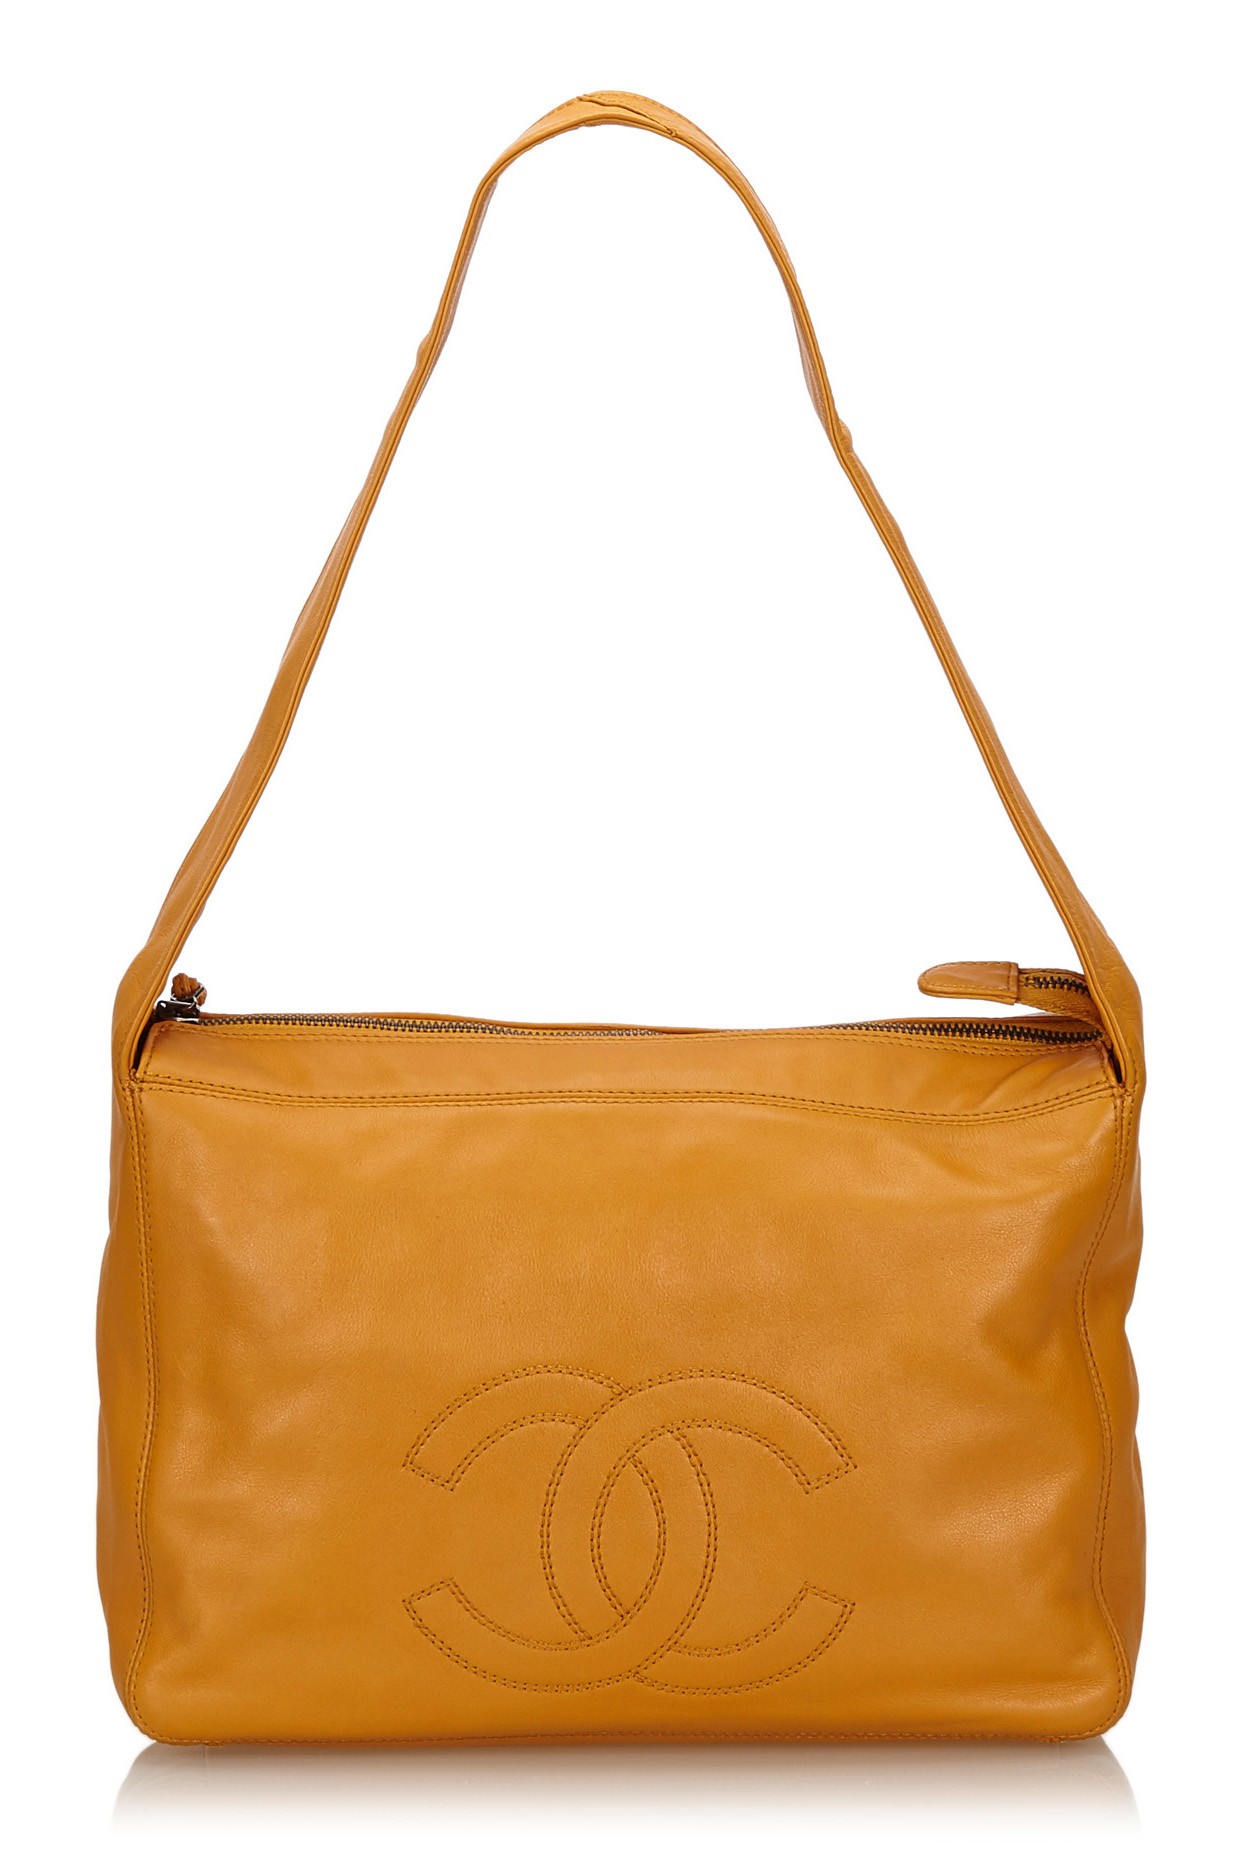 Chanel Ostrich Leather Shoulder Bag Brown Golden Exotic leather